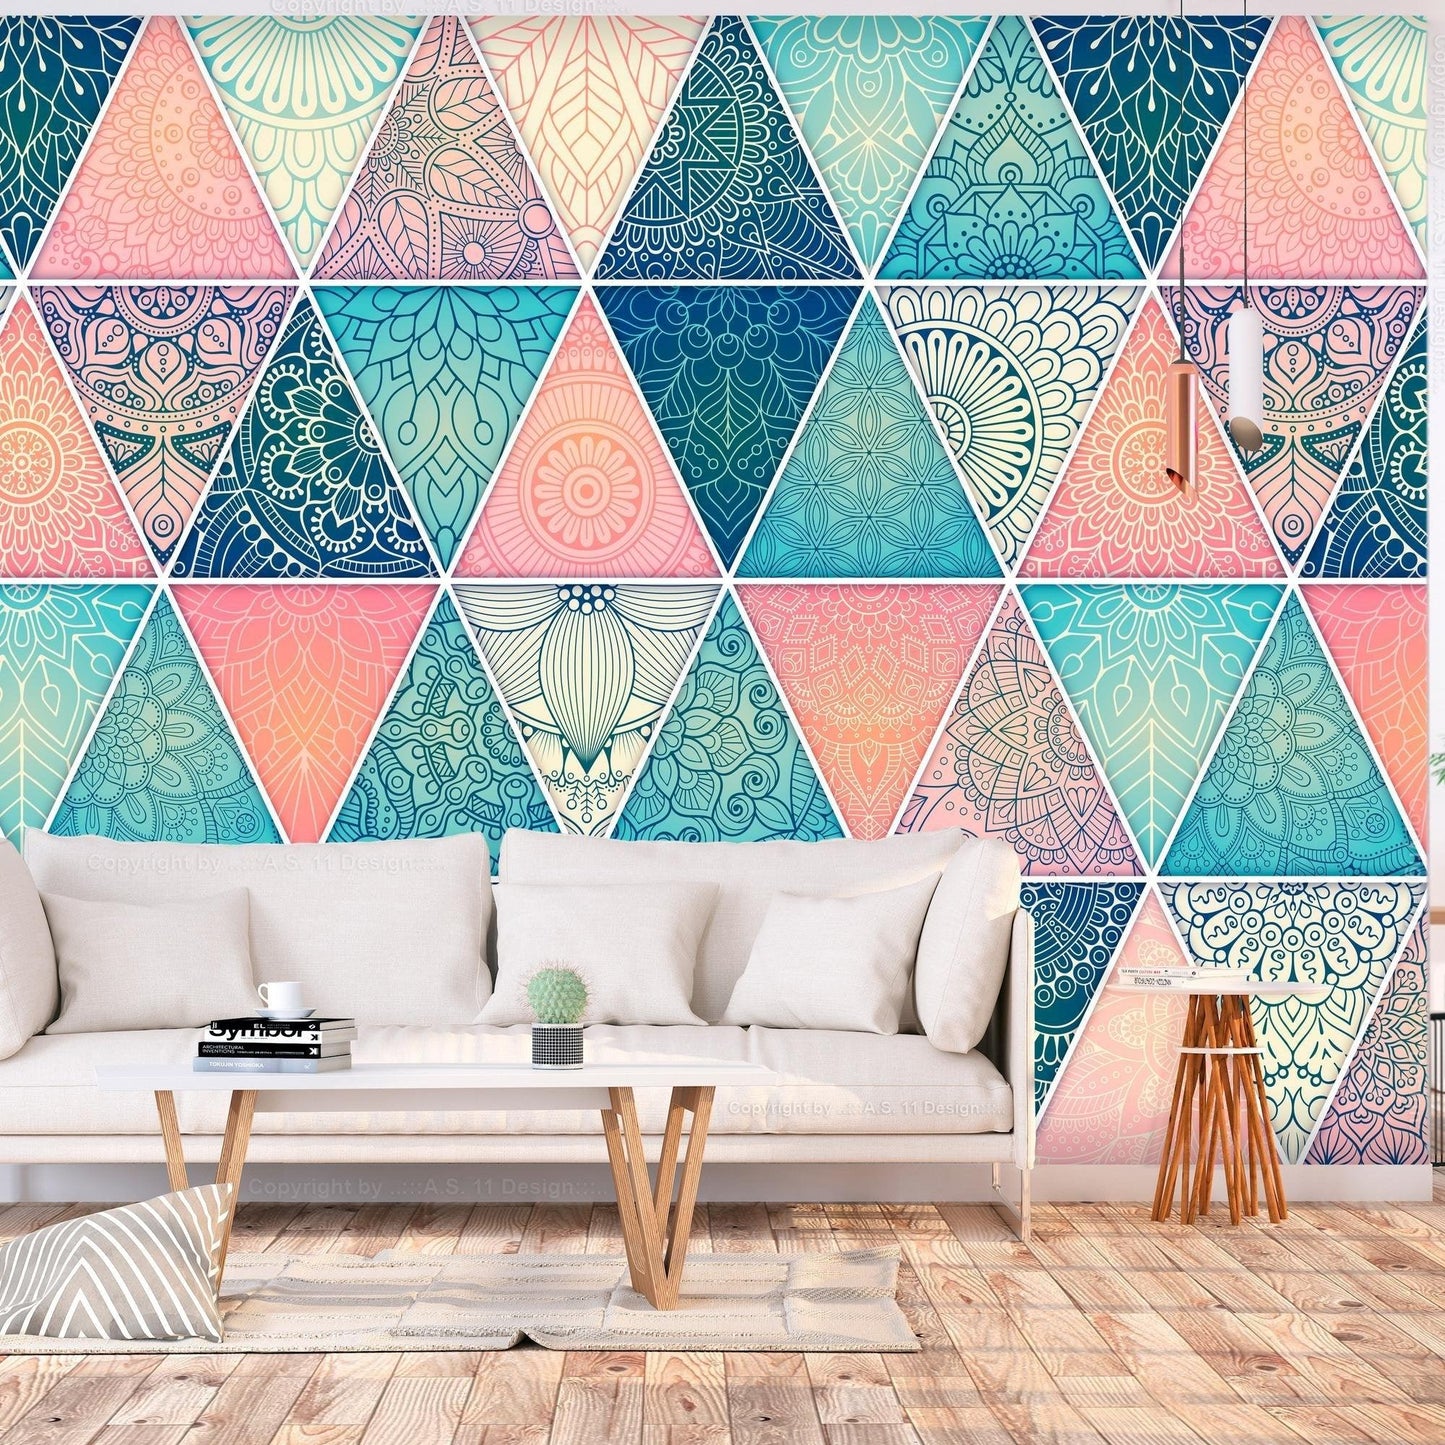 Peel and stick wall mural - Oriental Triangles - www.trendingbestsellers.com